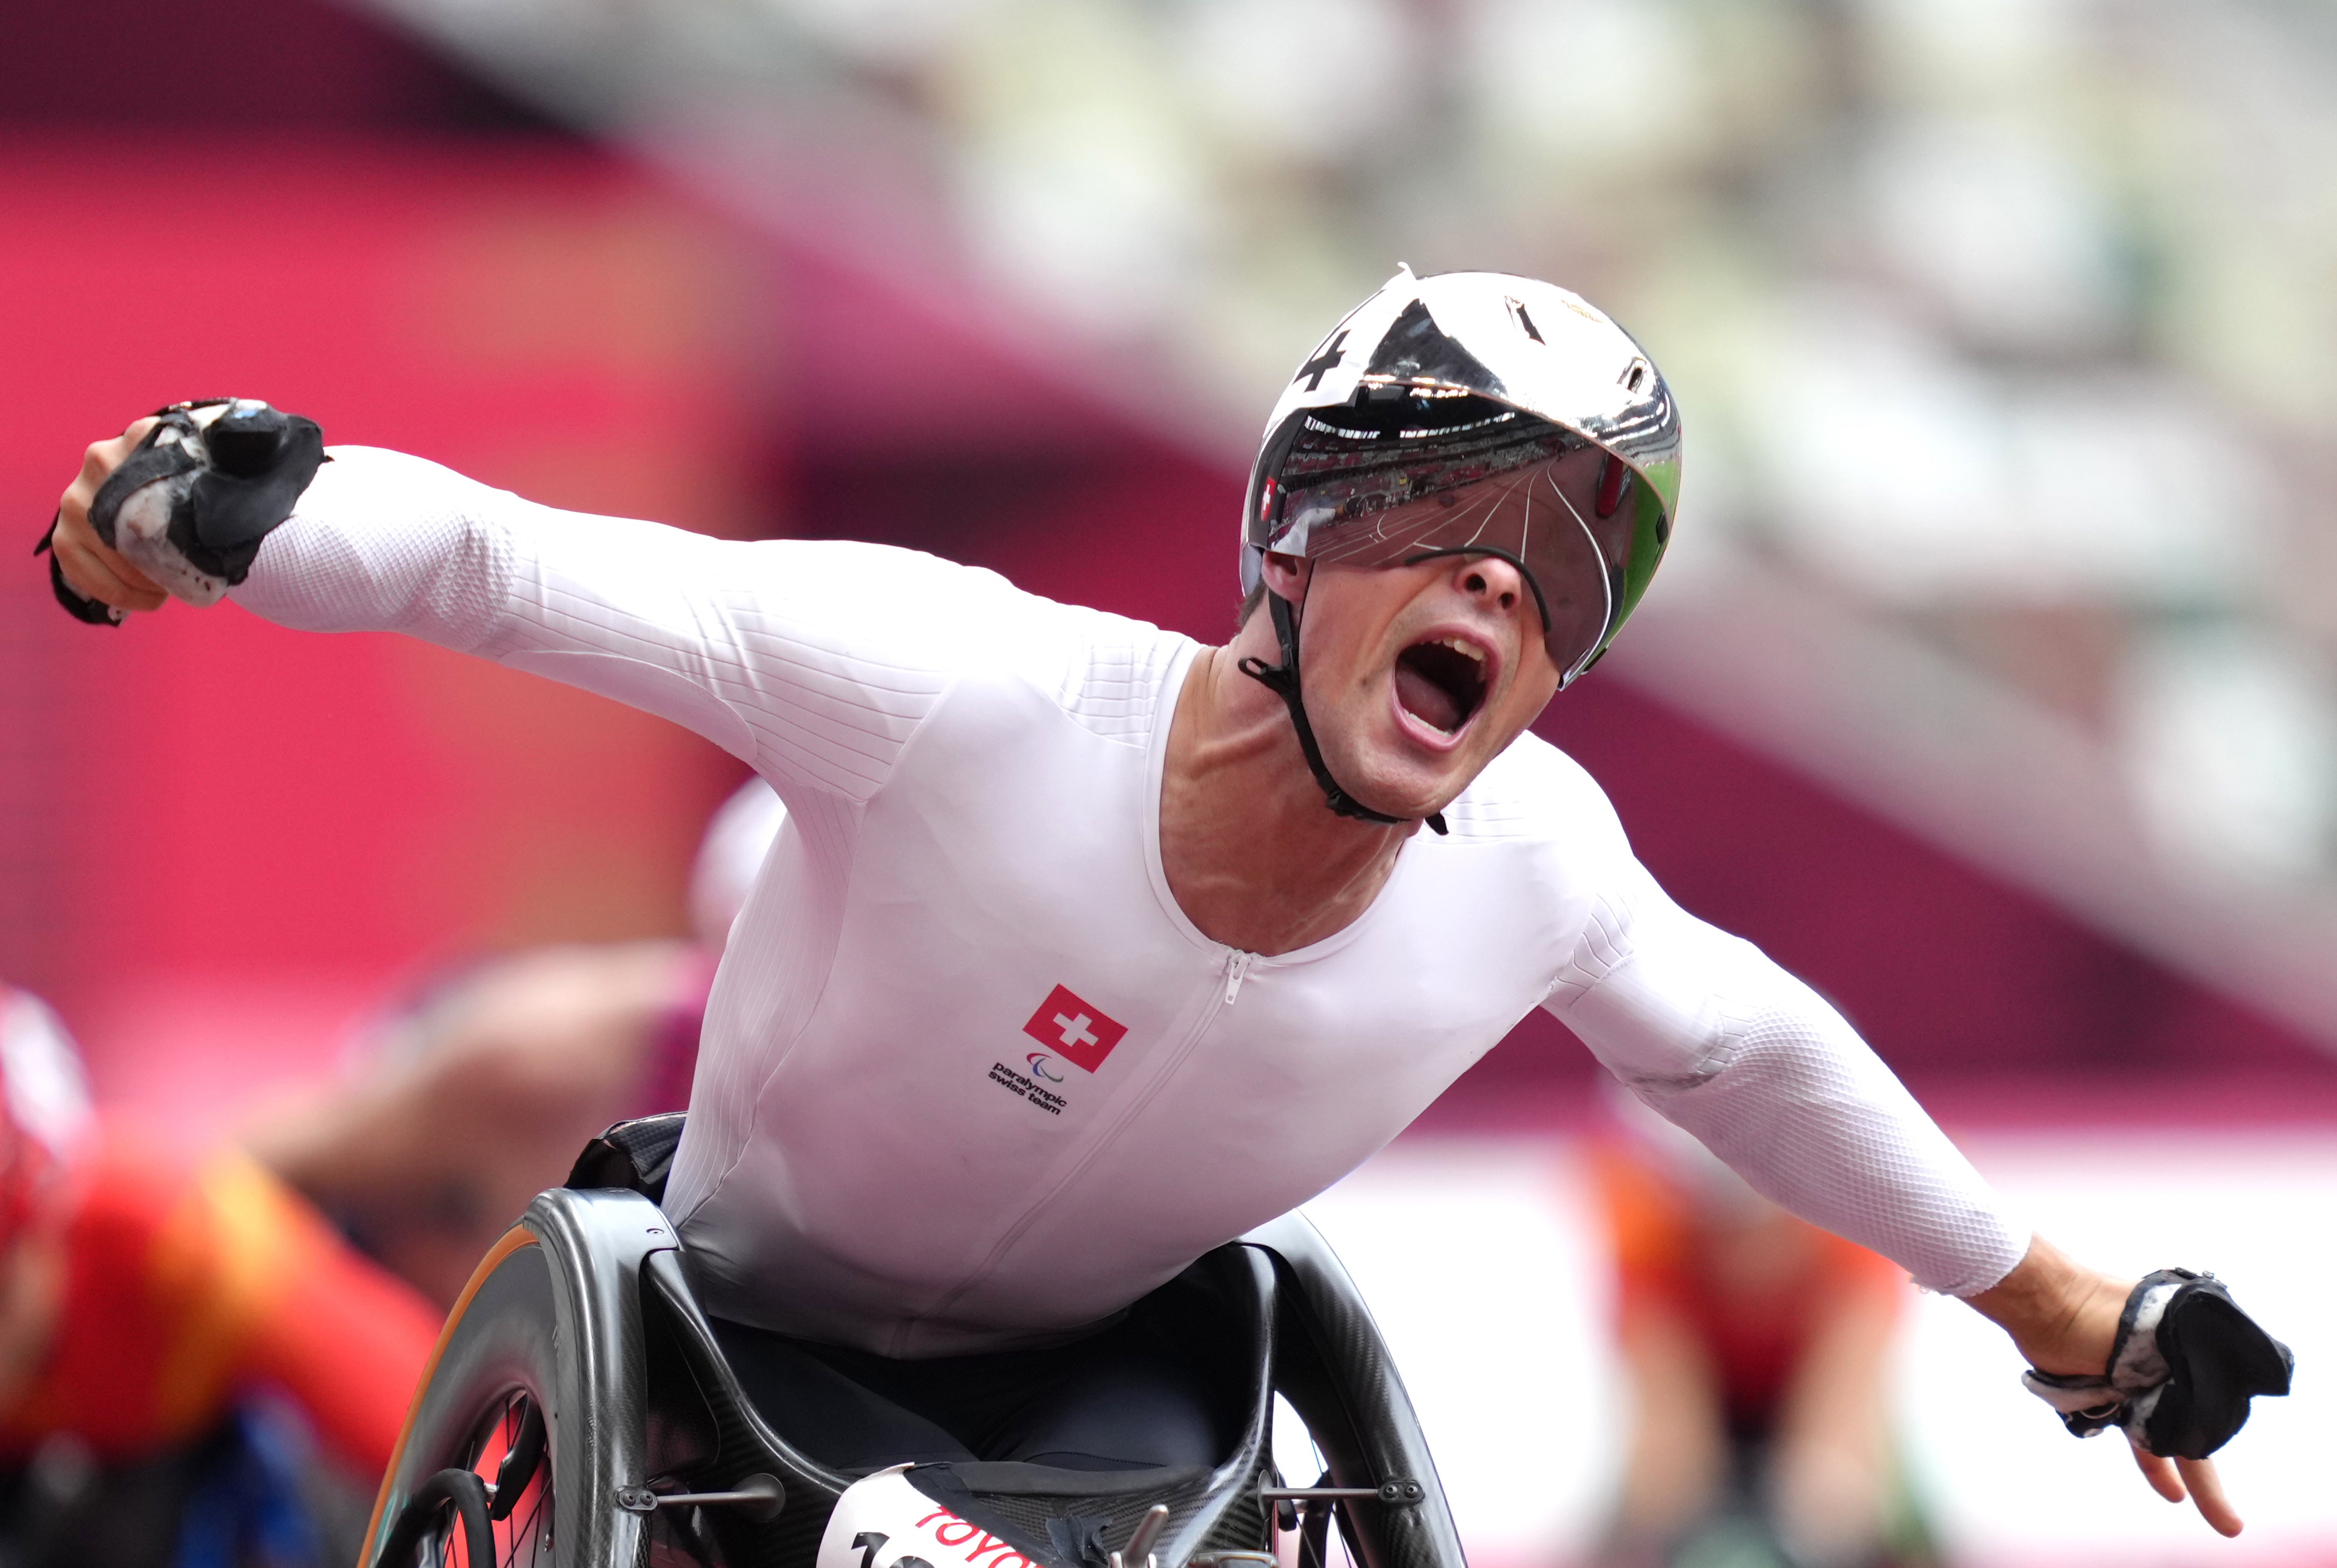 Marcel Hug celebrates winning the 5,000 metres at the Tokyo Paralympics (John Walton/PA)